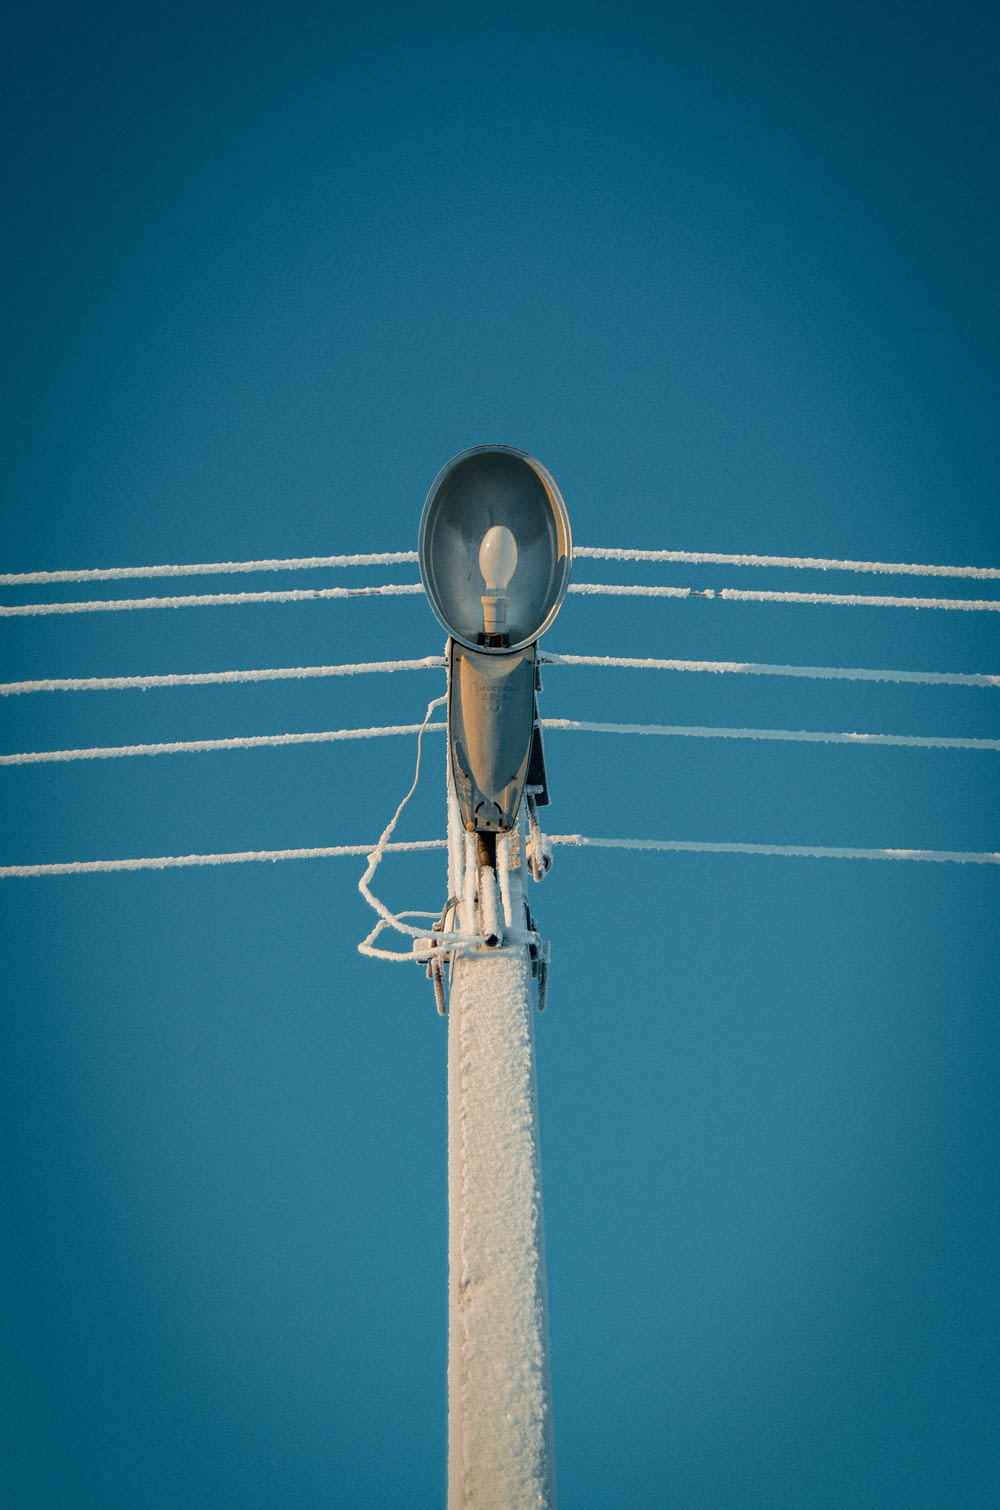 grey street light under blue sky during daytime